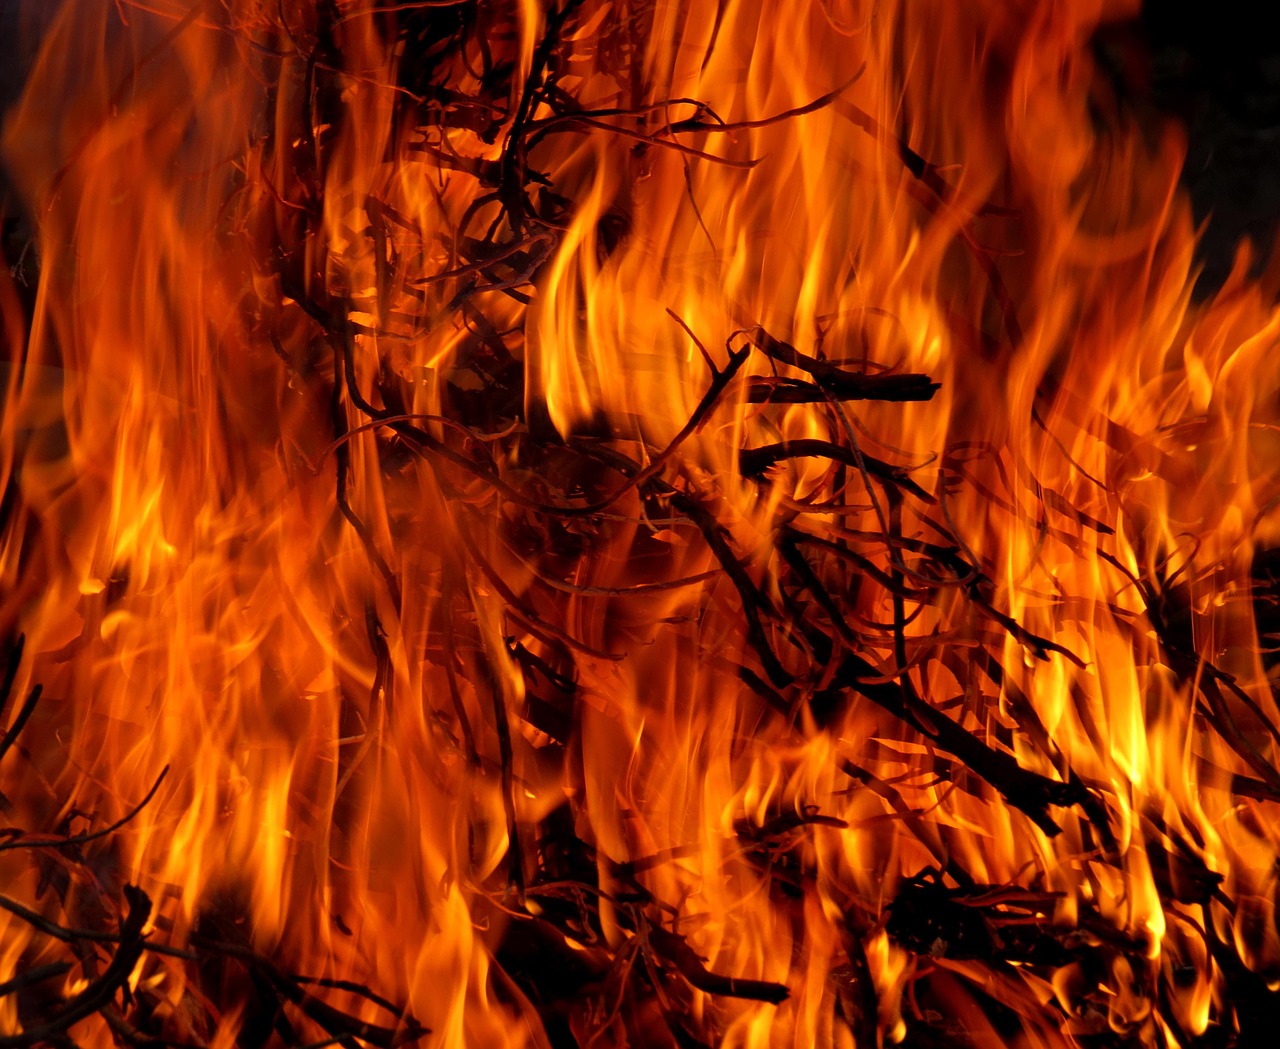 Image result for Description of Hell by Medjugorje visionaries